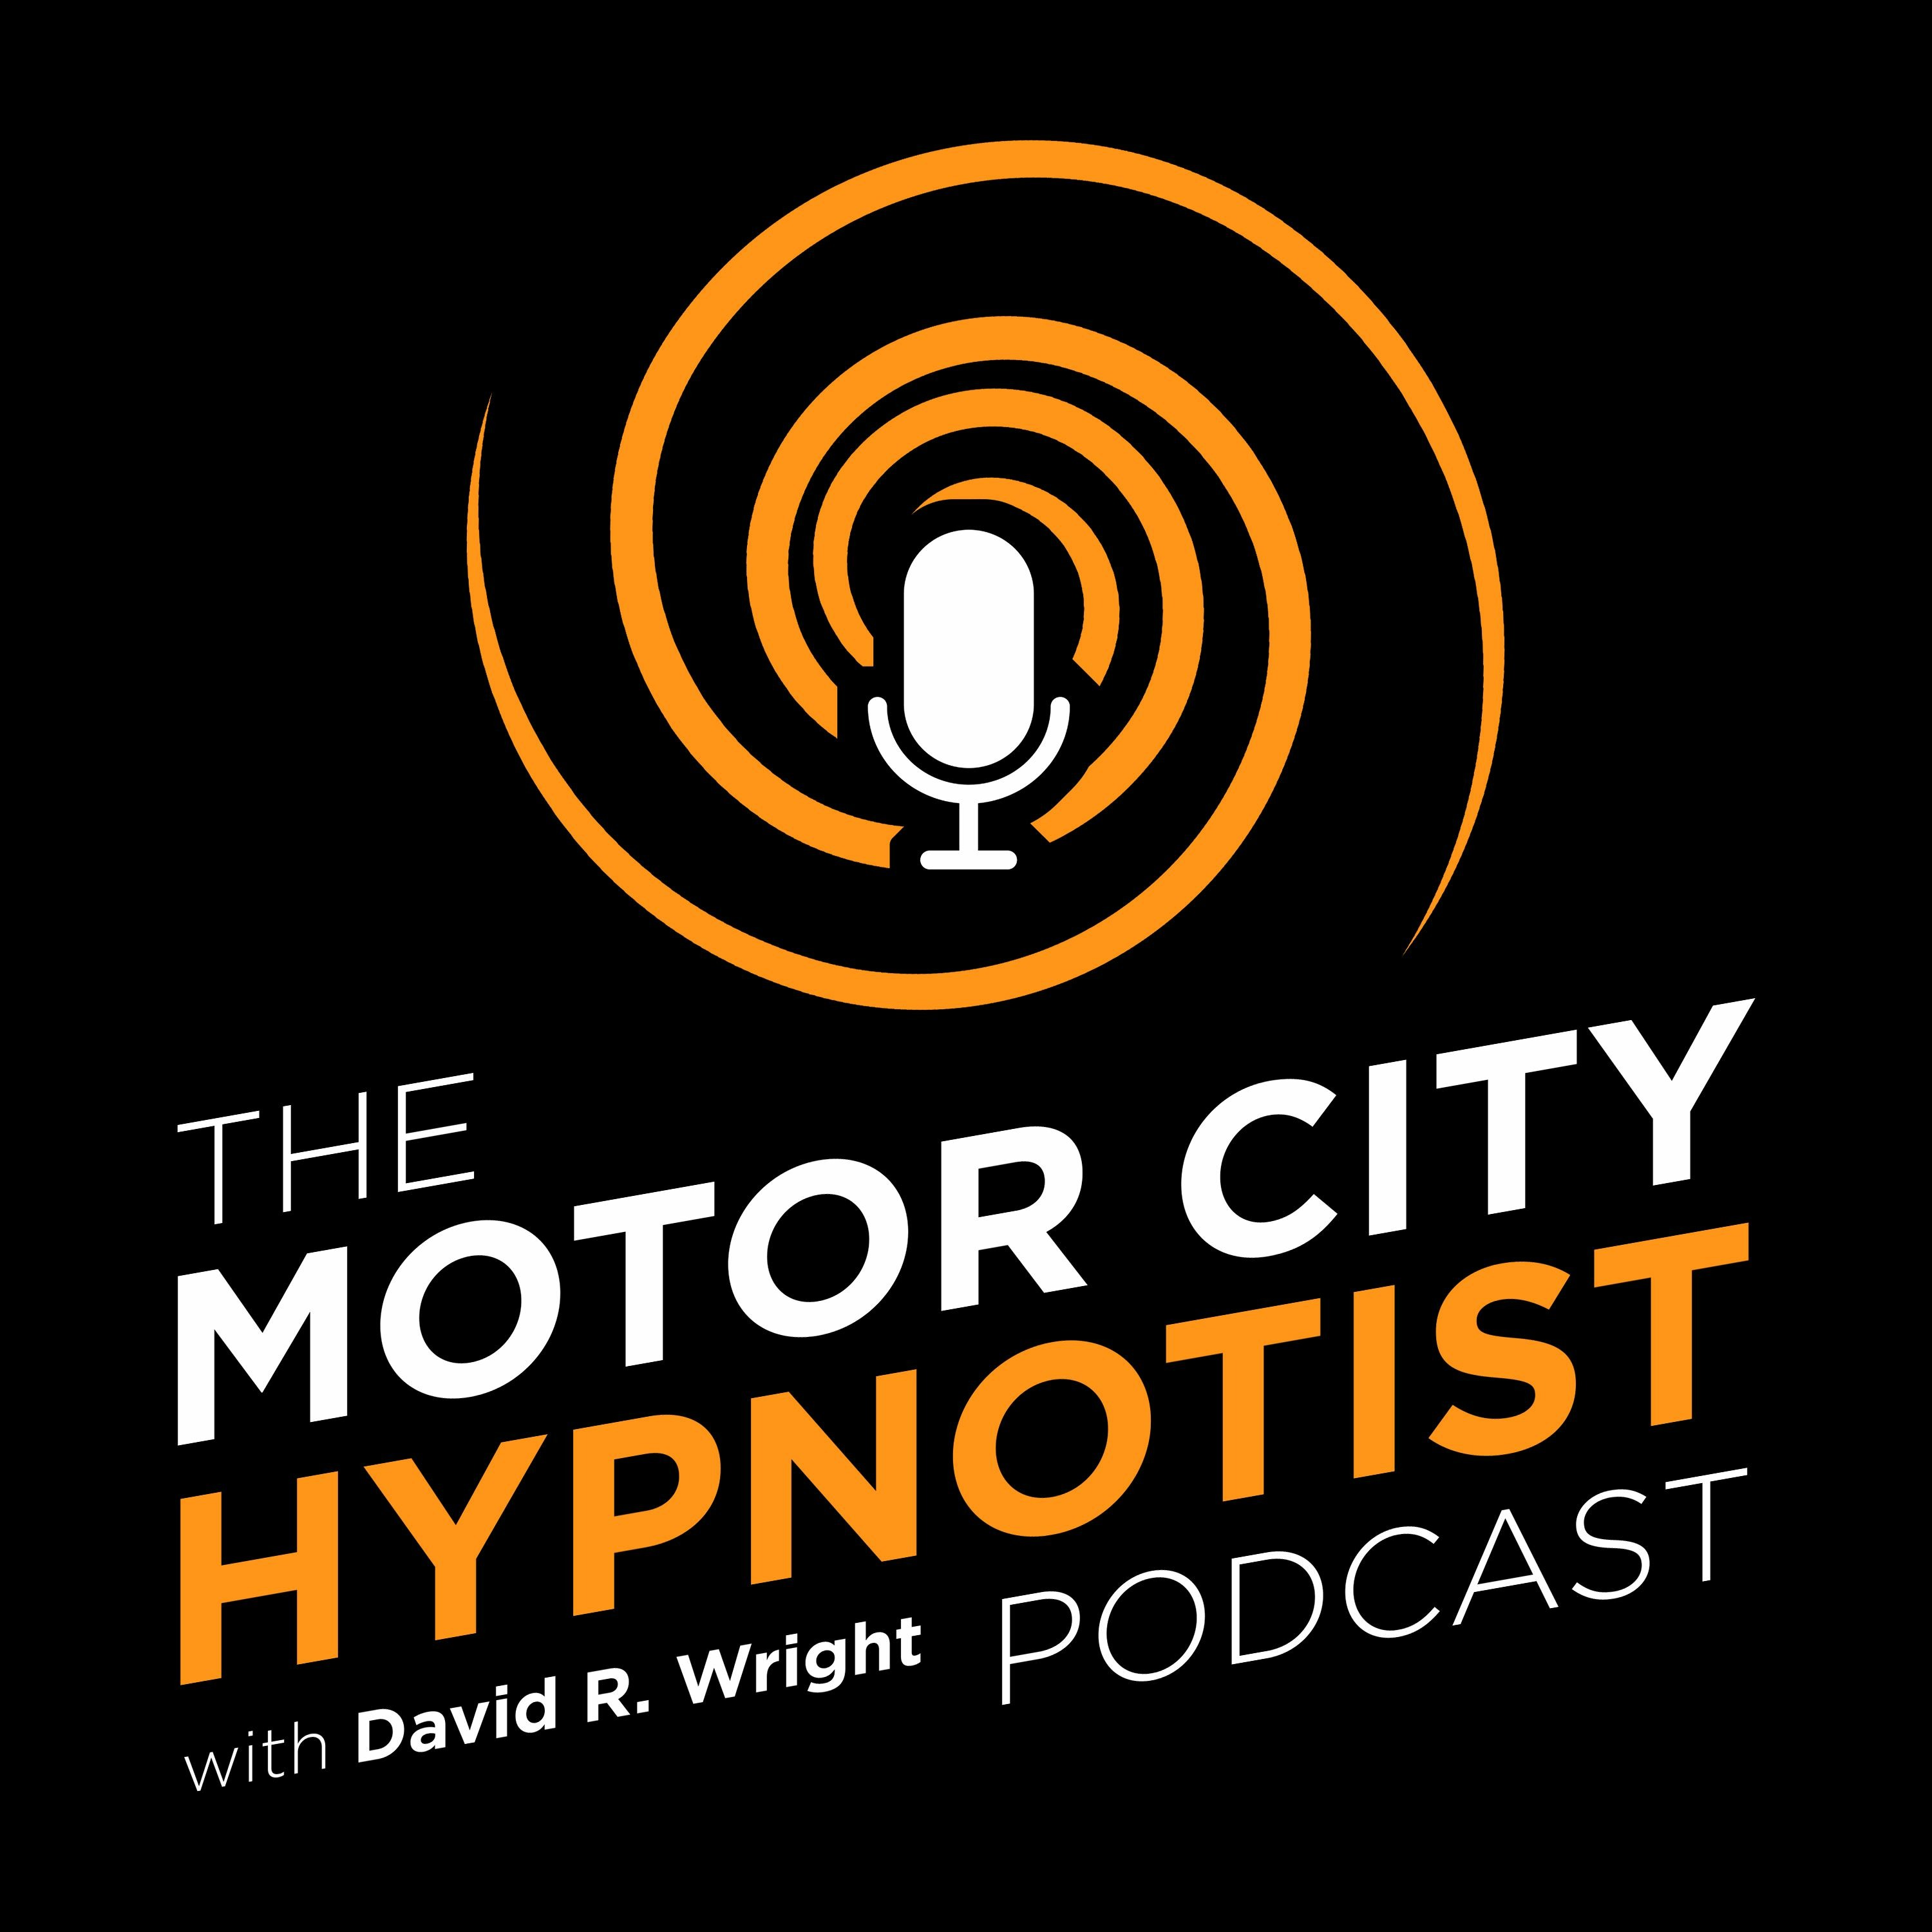 Motor City Hypnotist Podcast with David Wright - Episode 42 Conversational Hypnosis